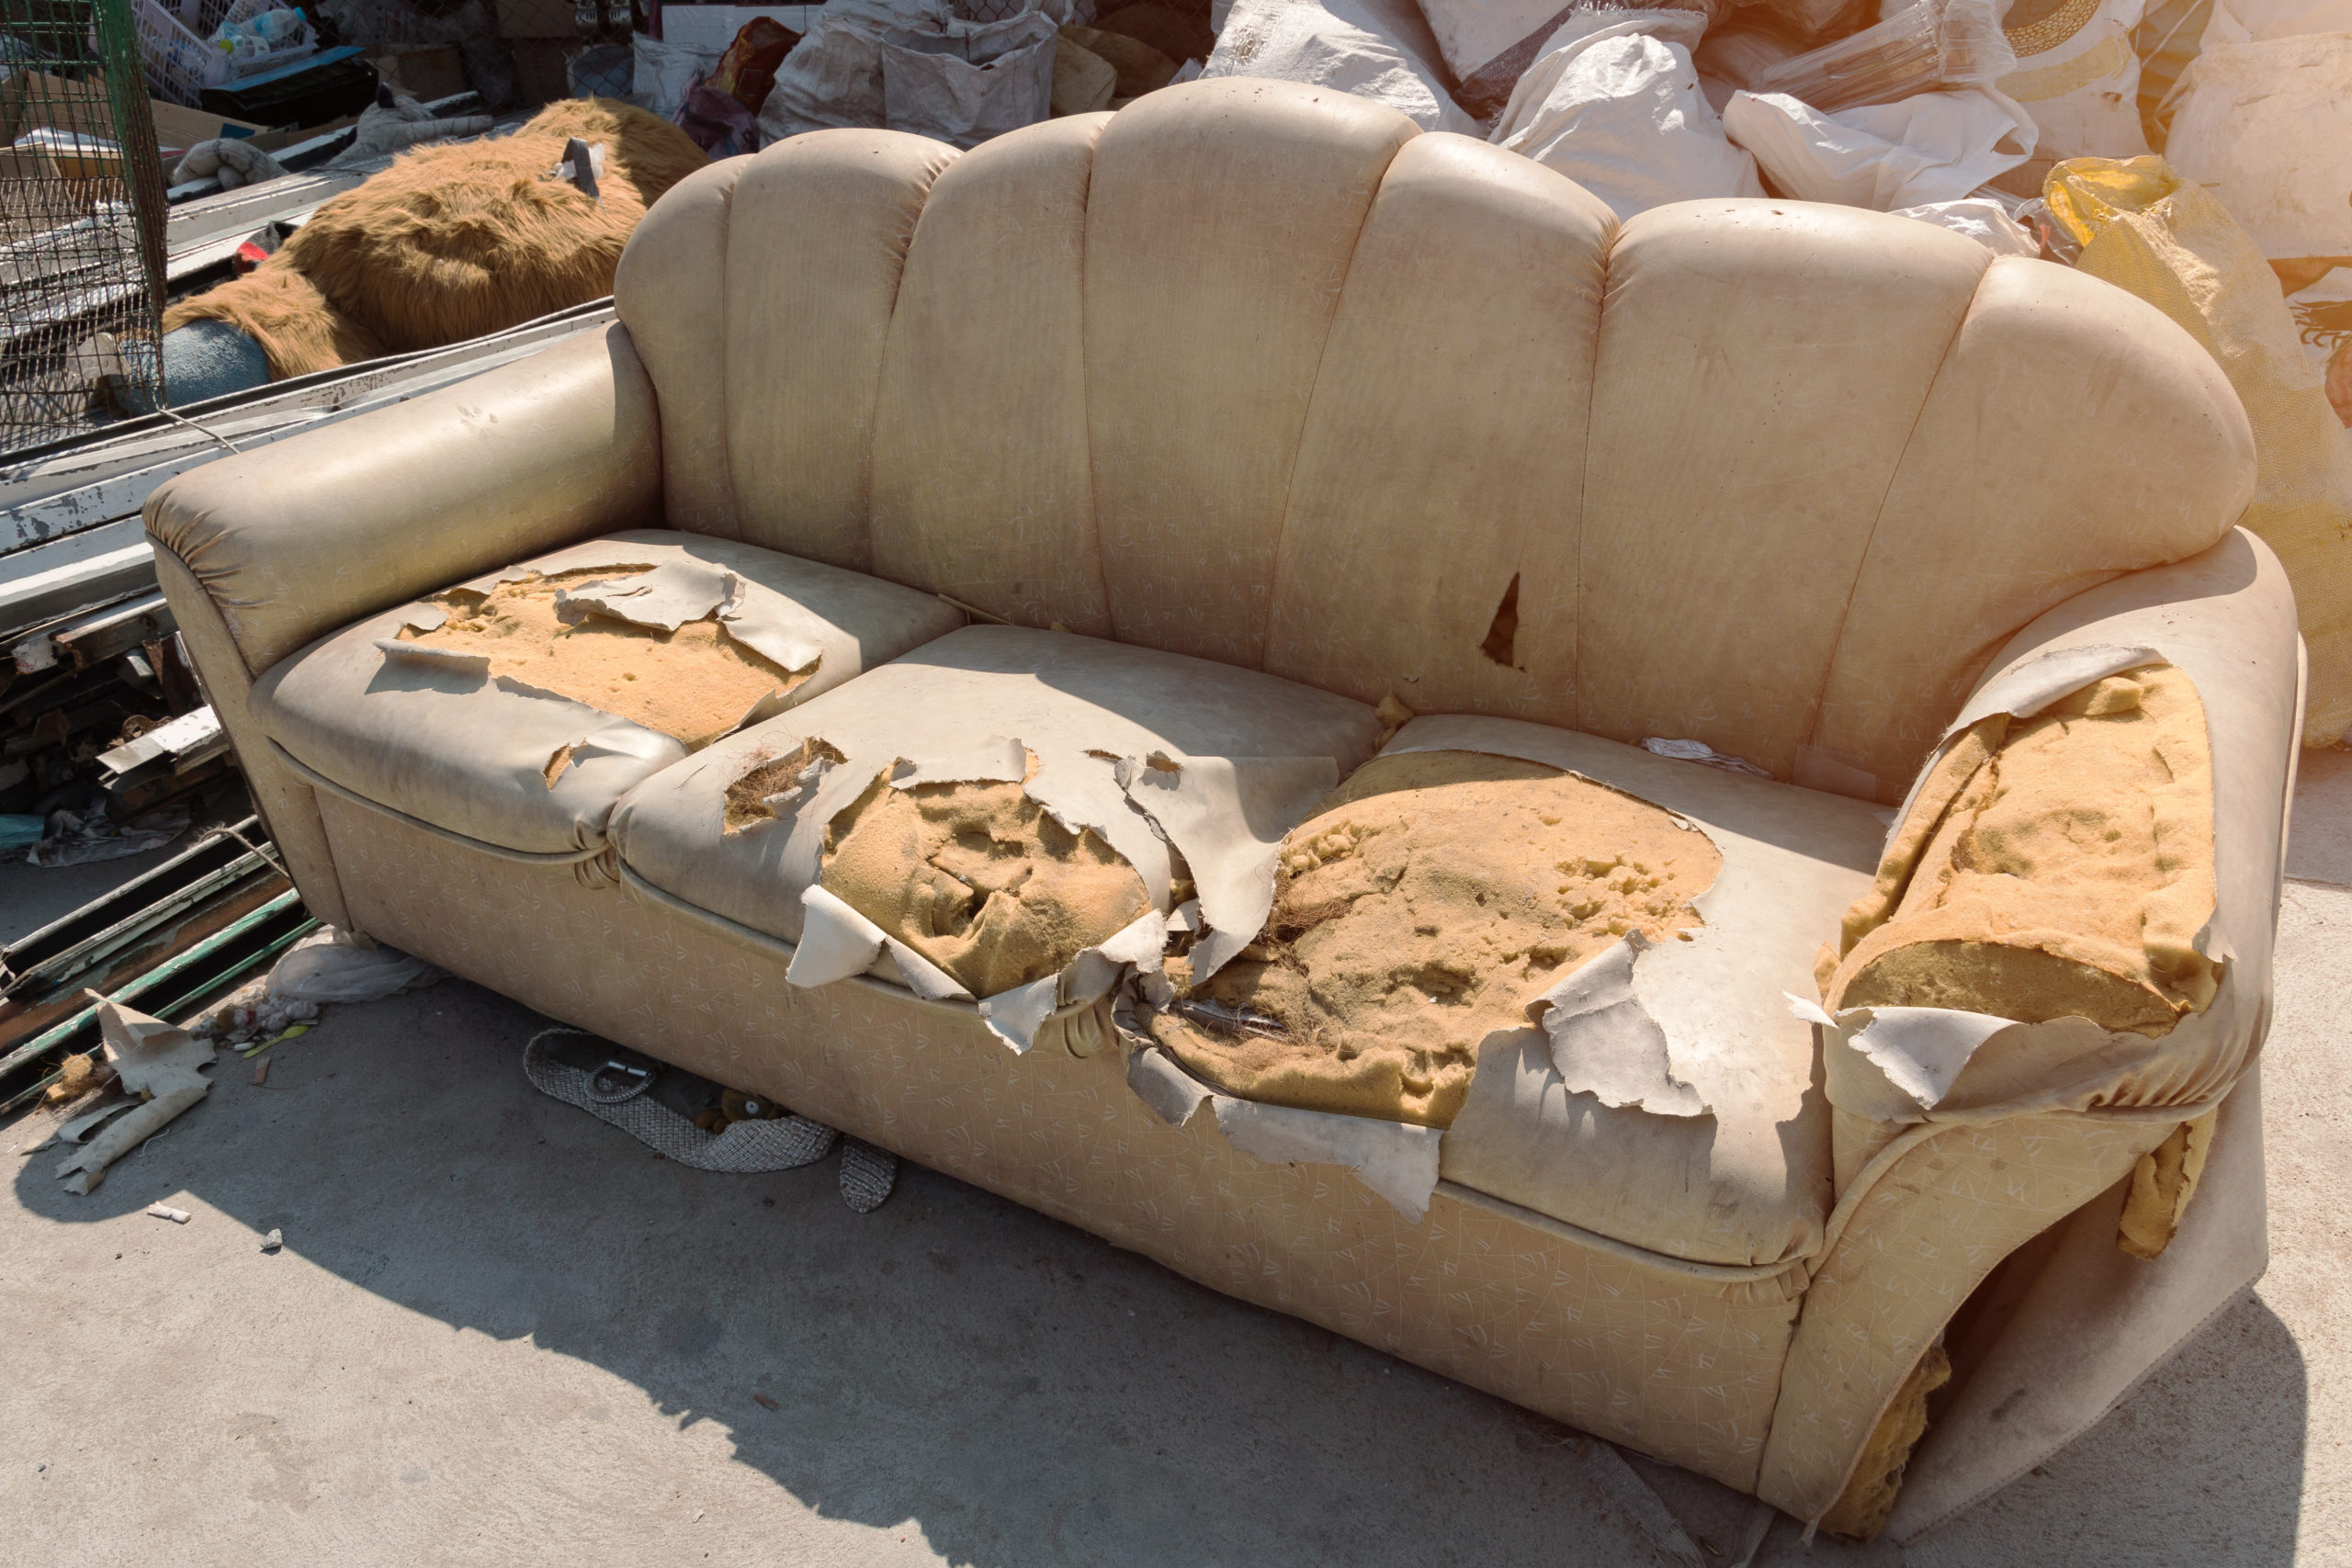 Some Sofas Set For Landfill Ban Over